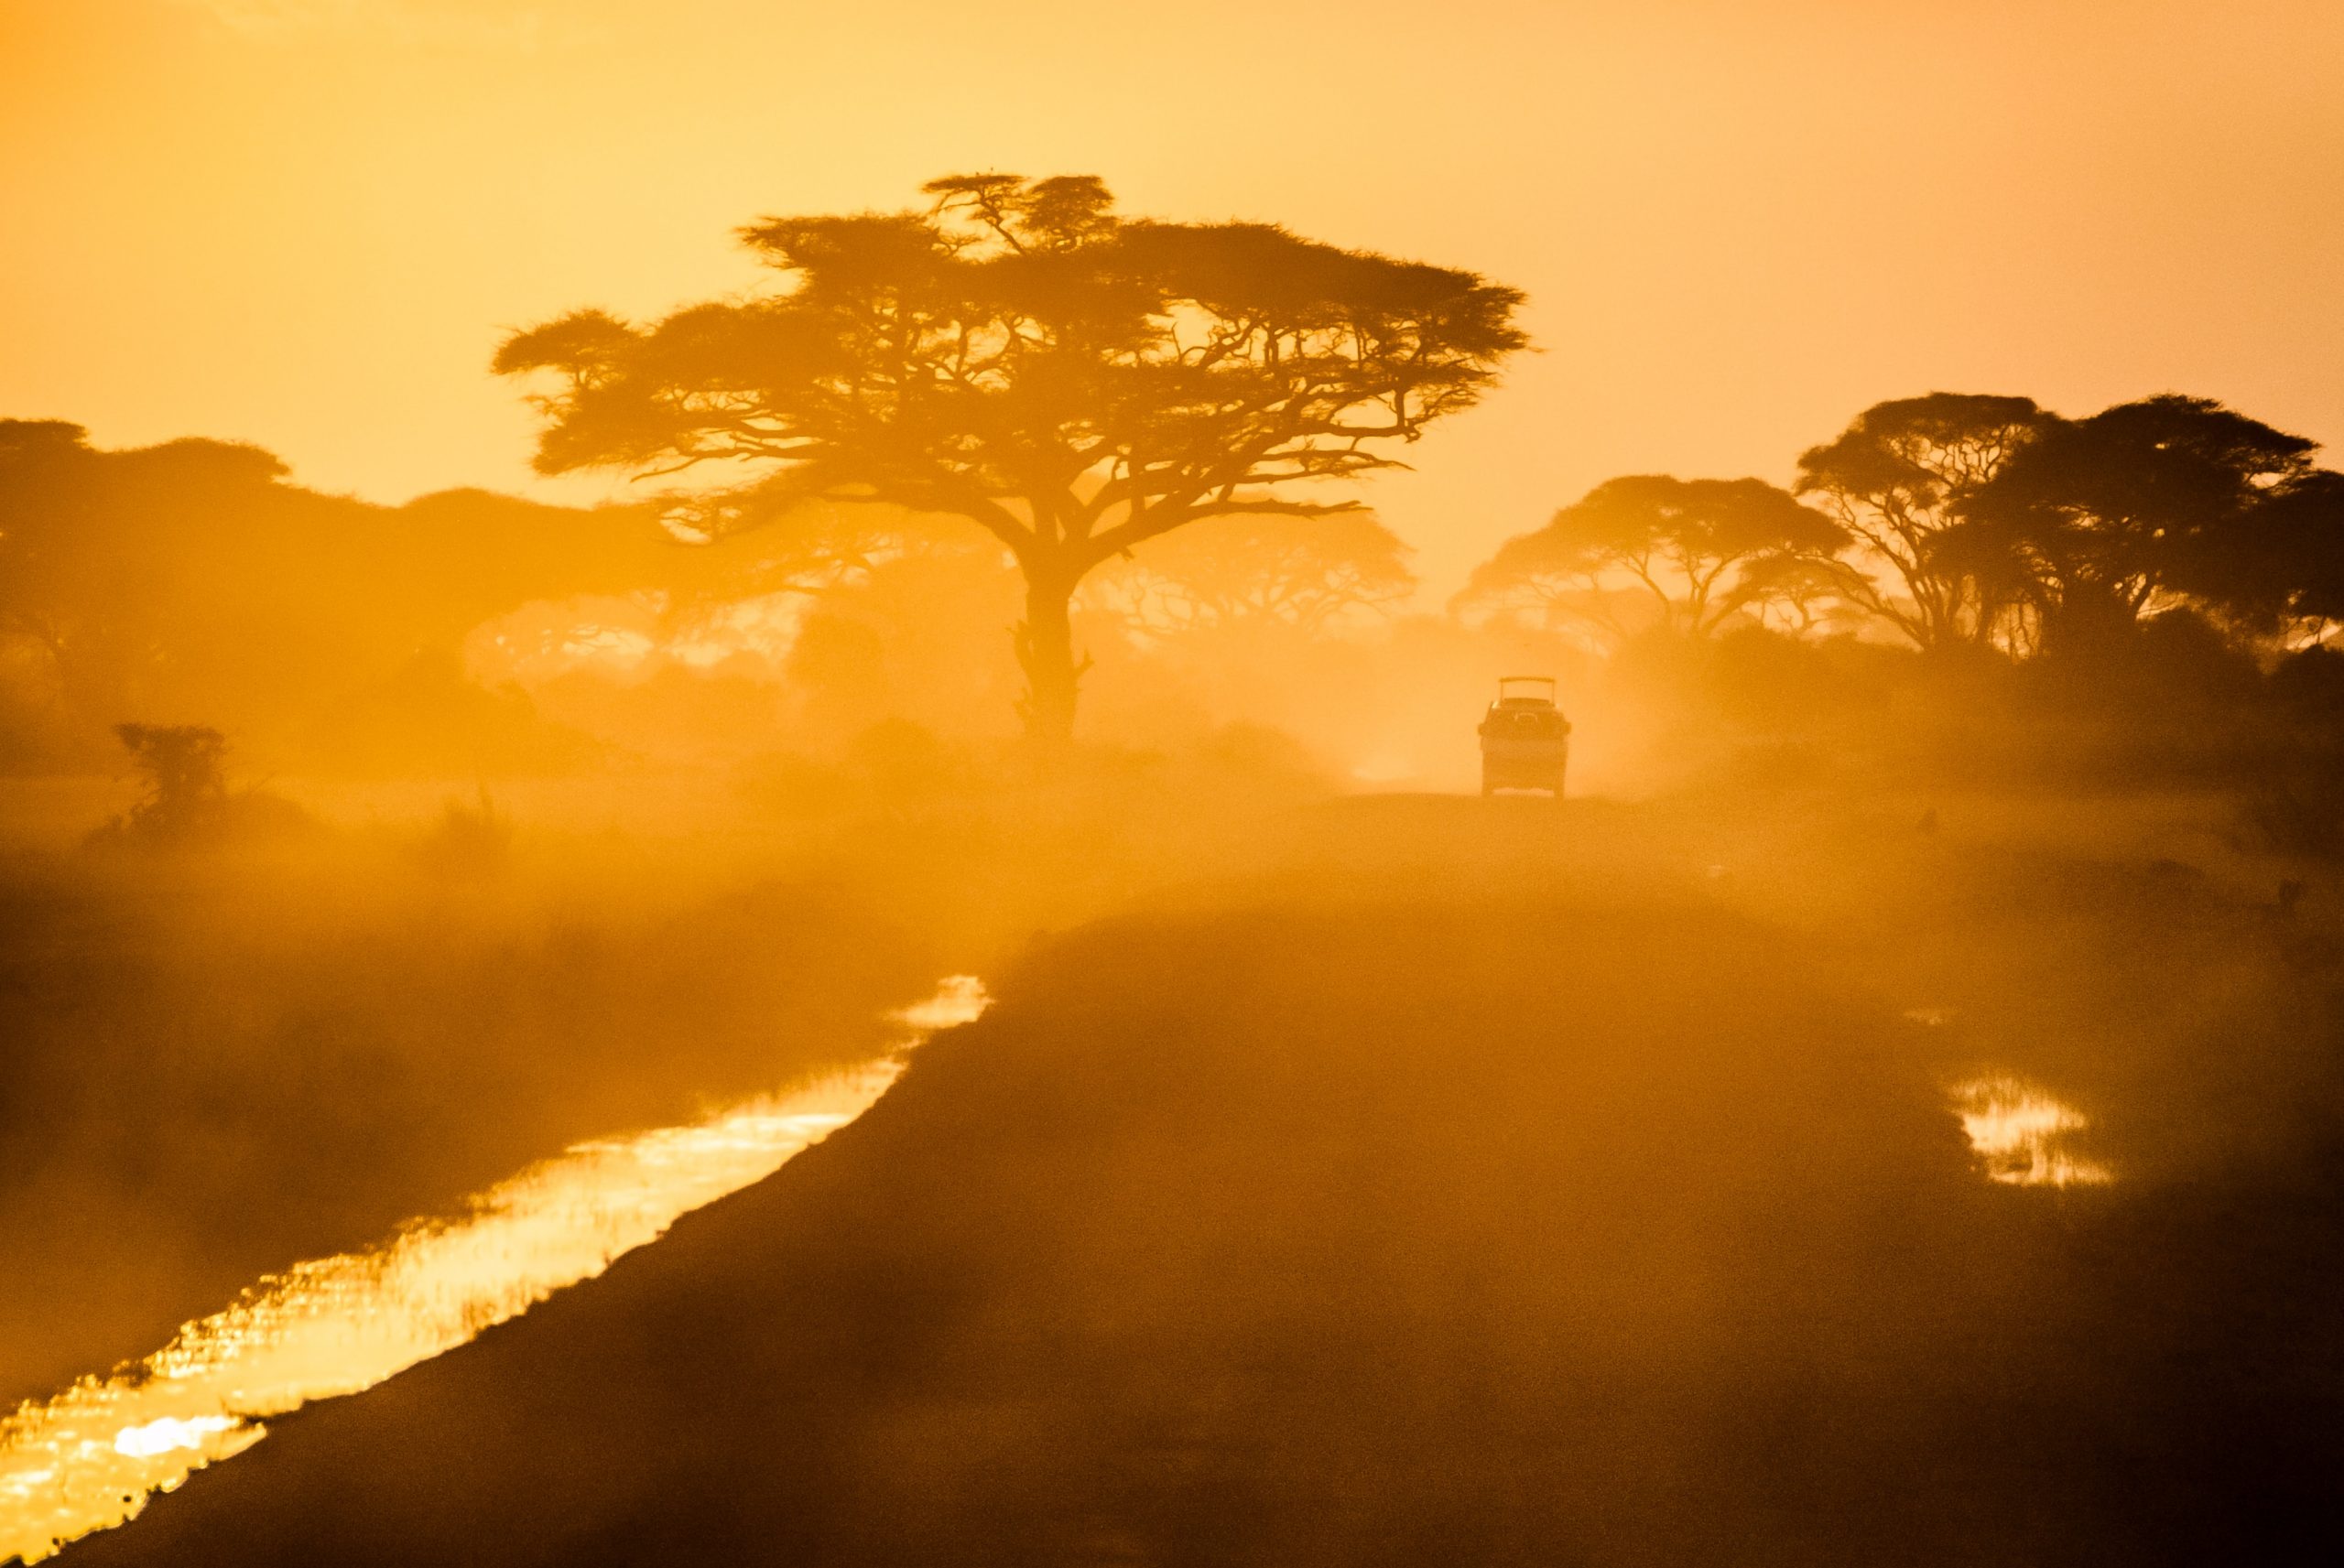 Car passing by in between trees ( Amboseli national park, Kenya). Photo by Sergey Pesterev on Unsplash